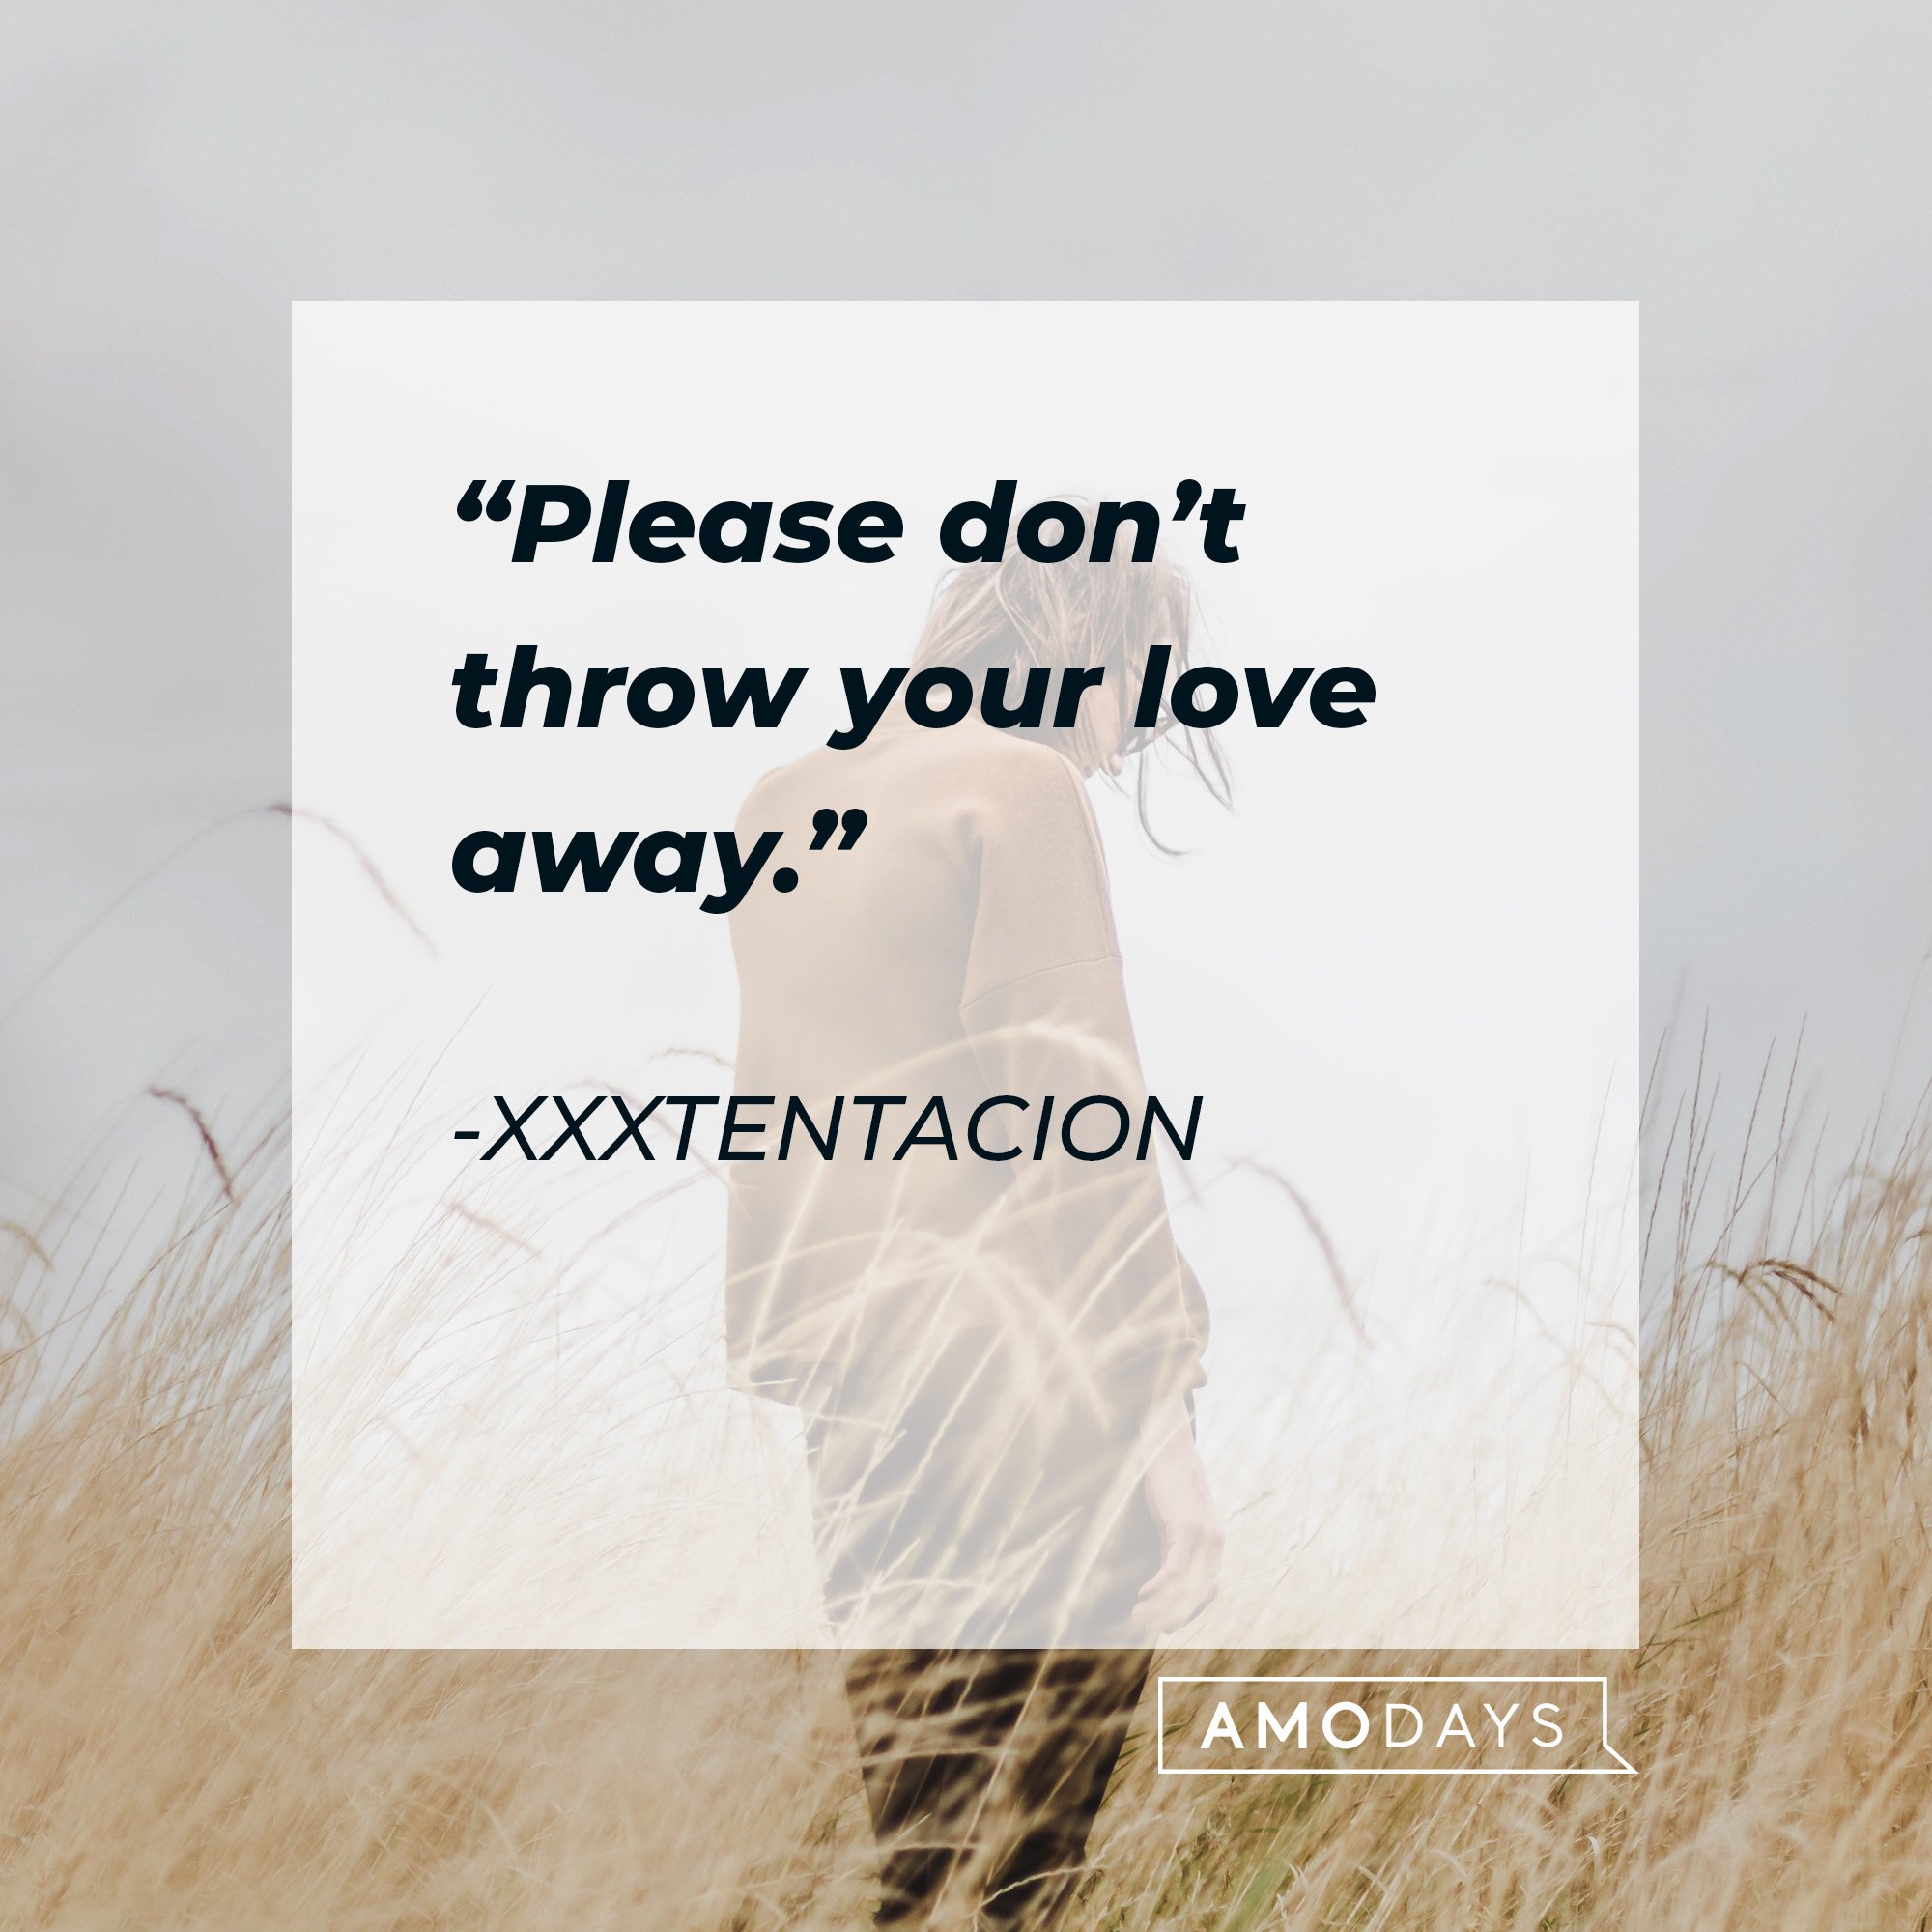 Xxxtentacion’s quote: “Please don’t throw your love away.” | Image: AmoDays